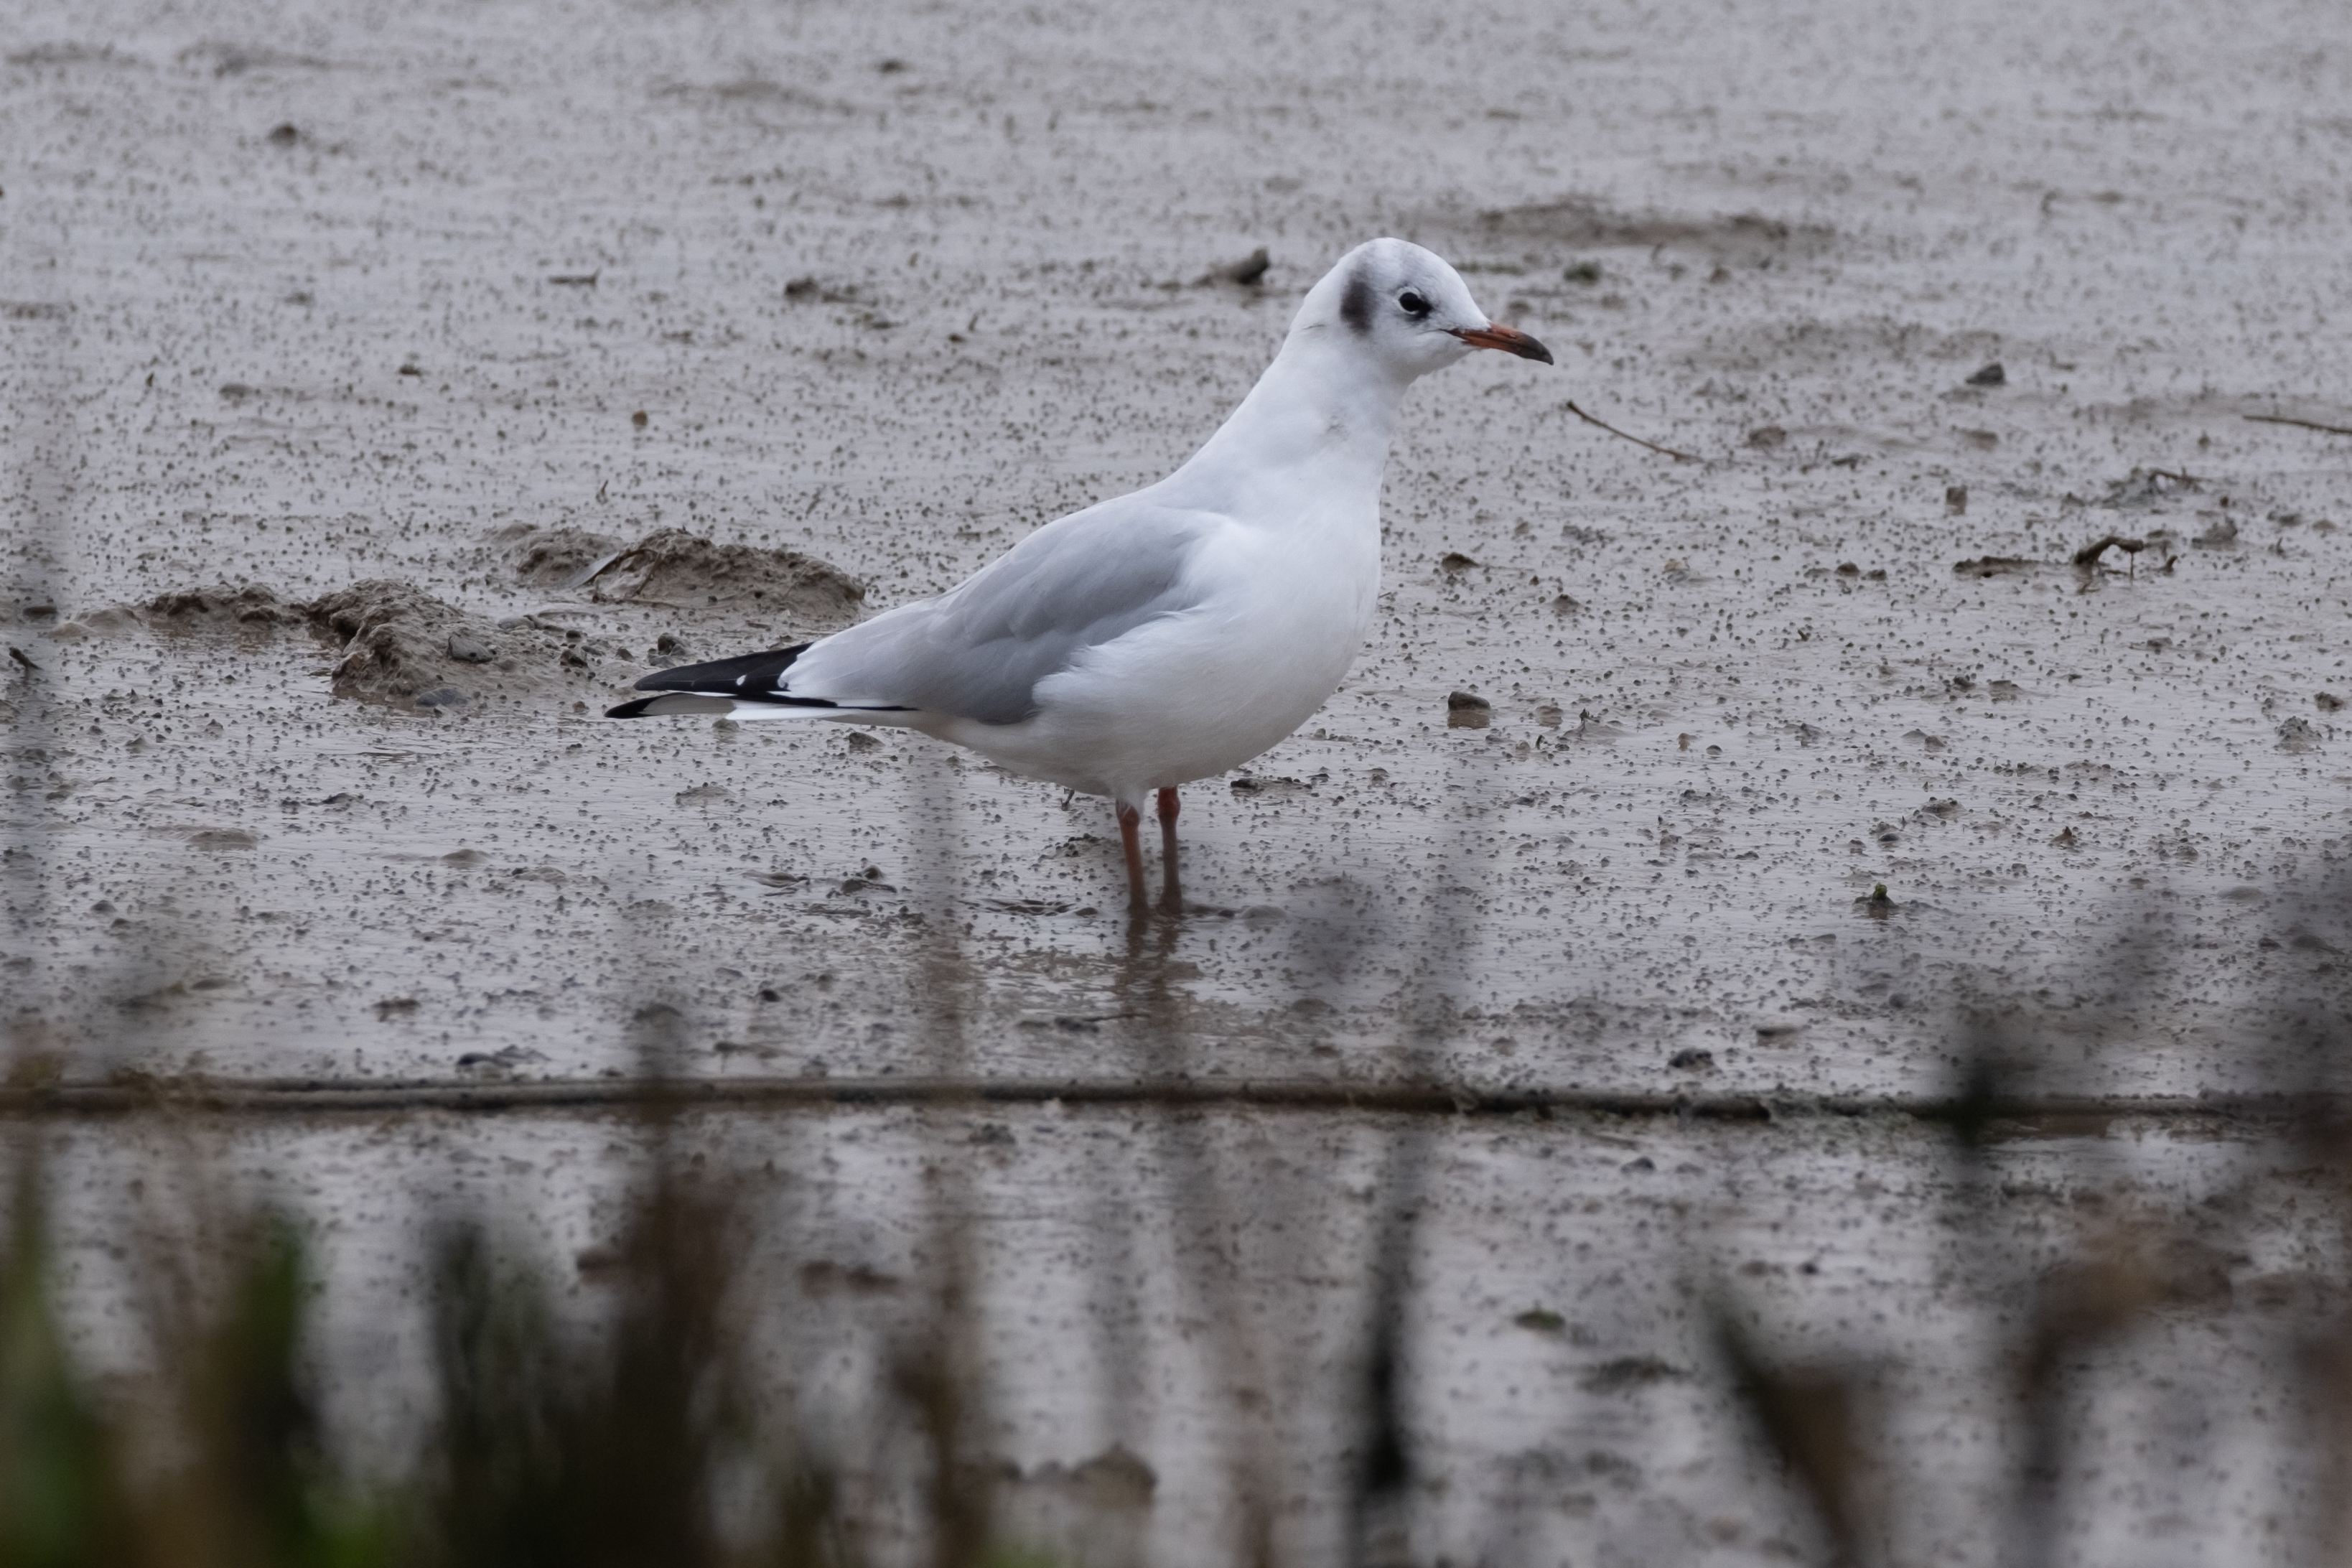 A seagull walking on mud flats